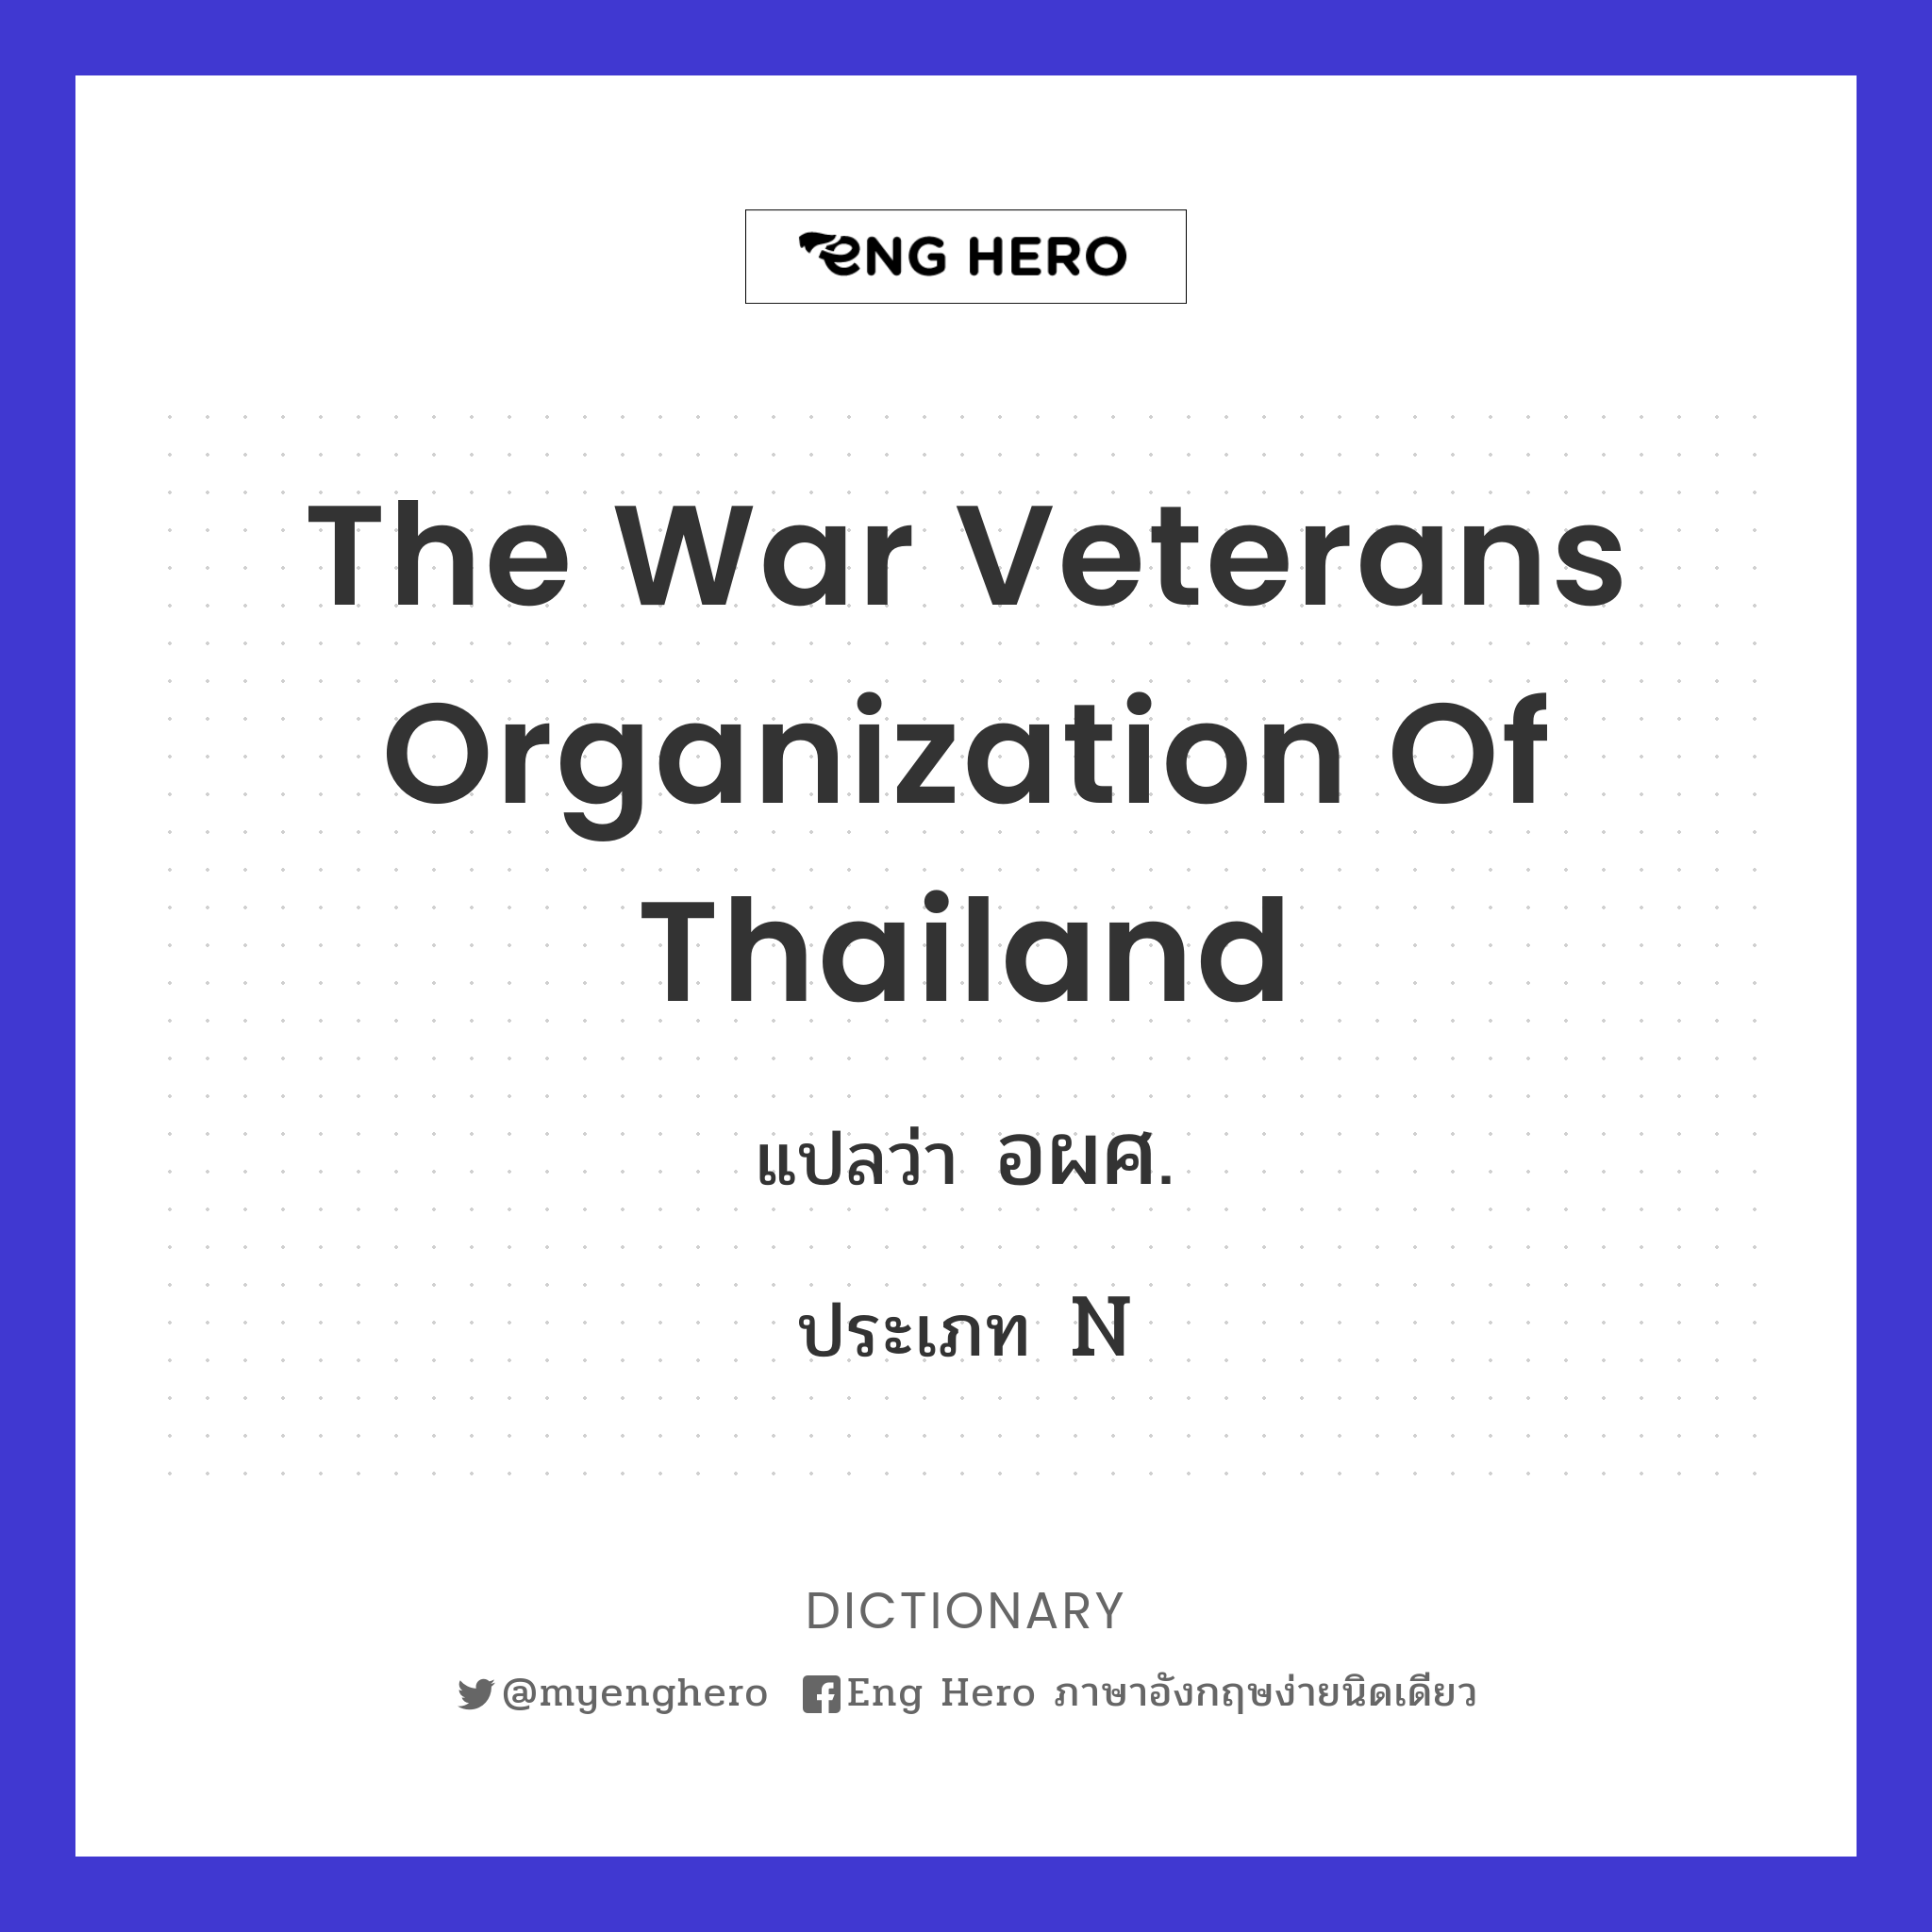 The War Veterans Organization of Thailand